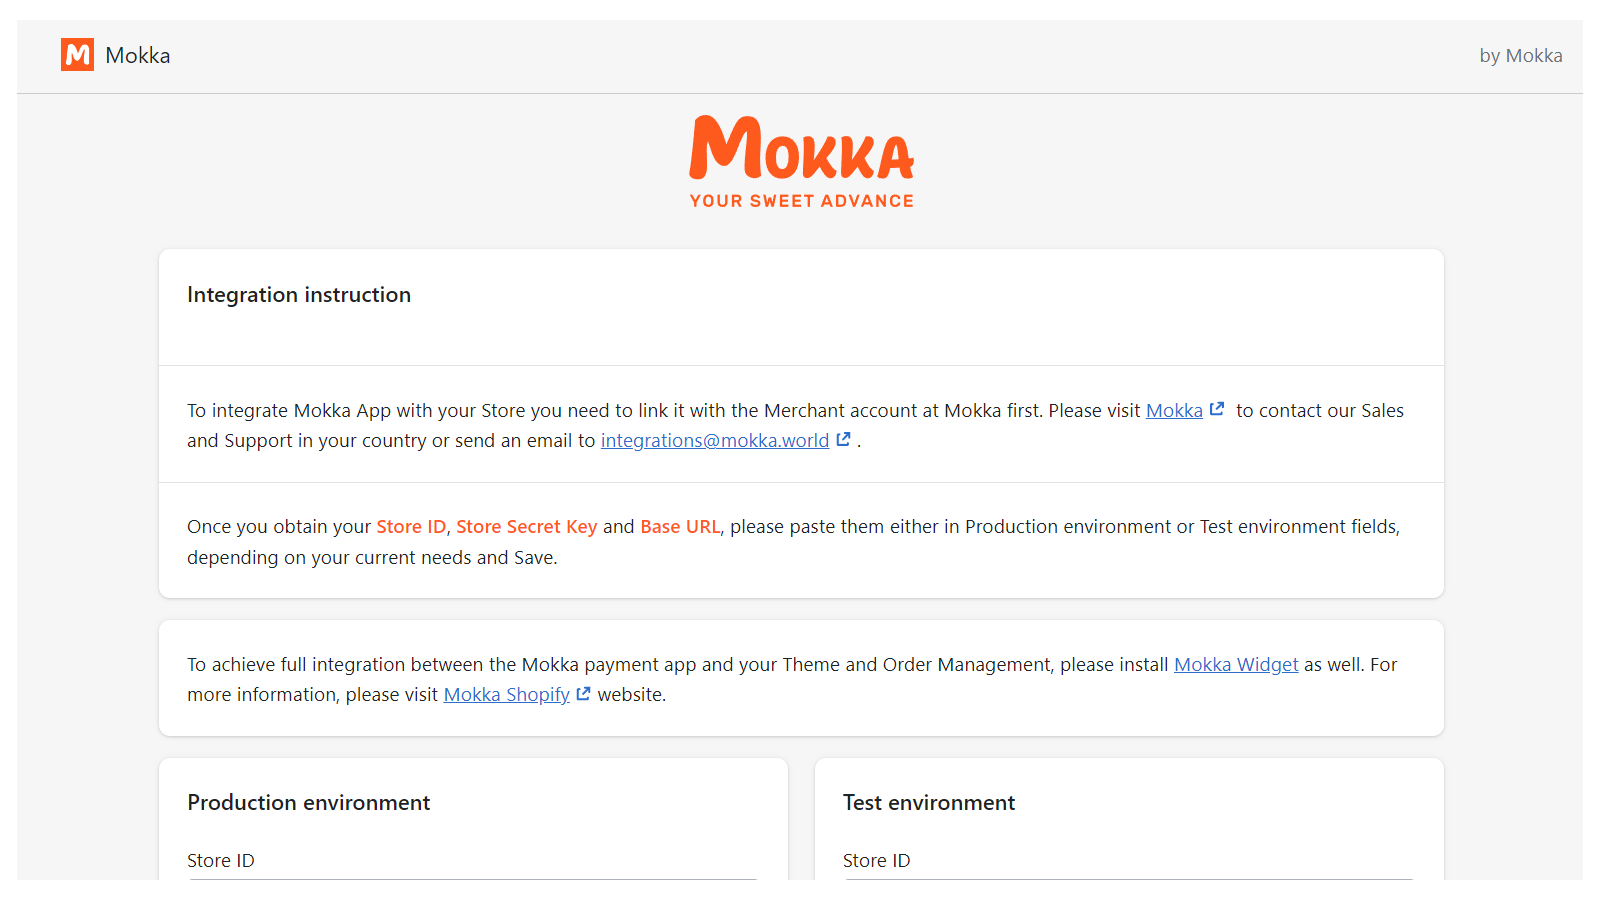 Mokka User Interface